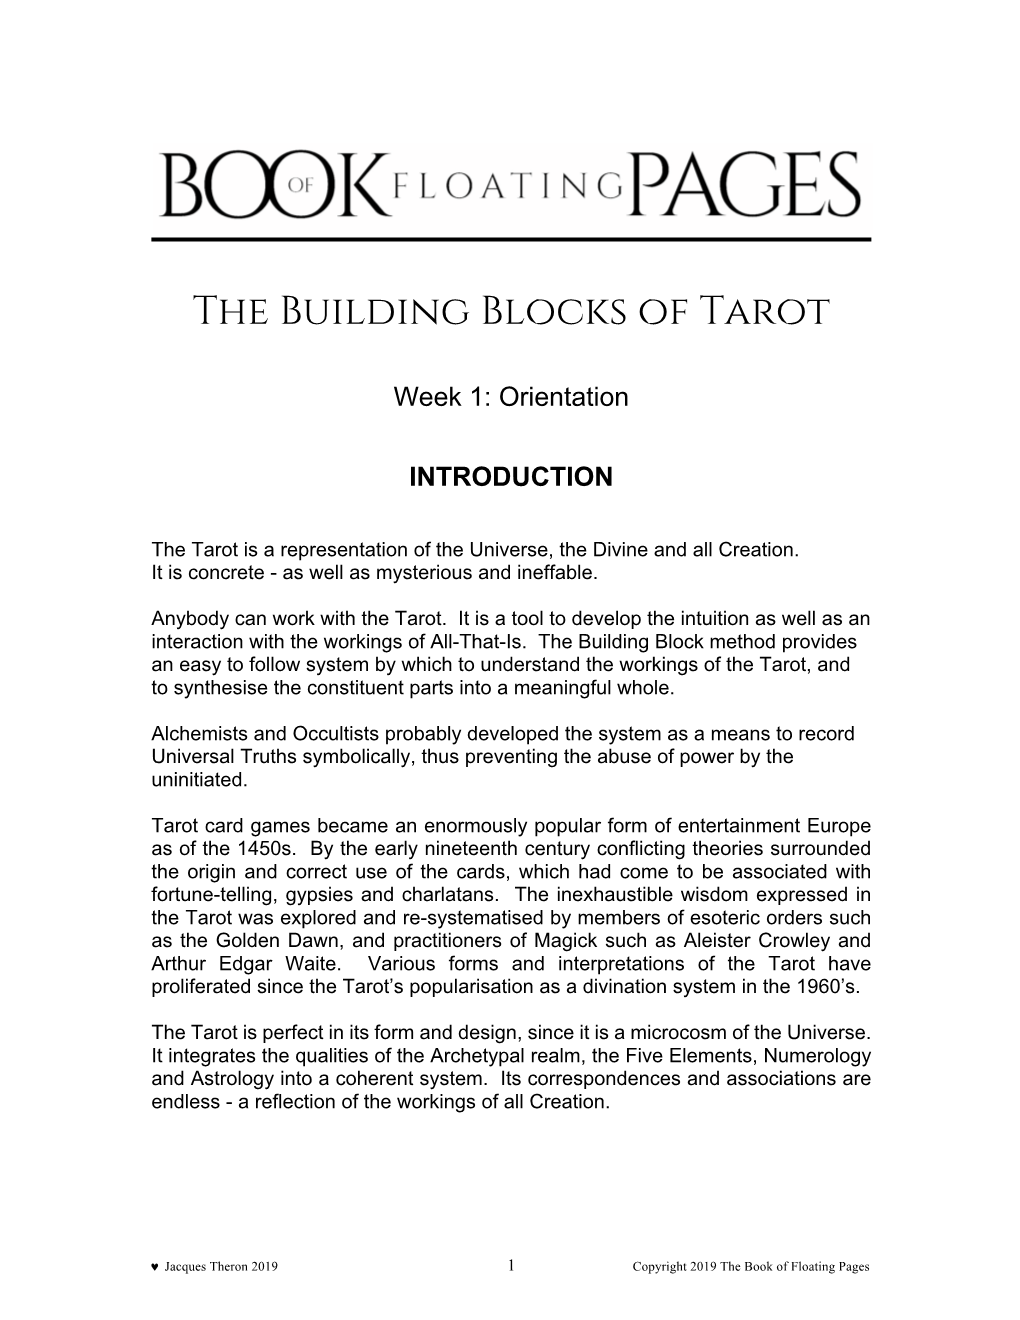 The Building Blocks of Tarot